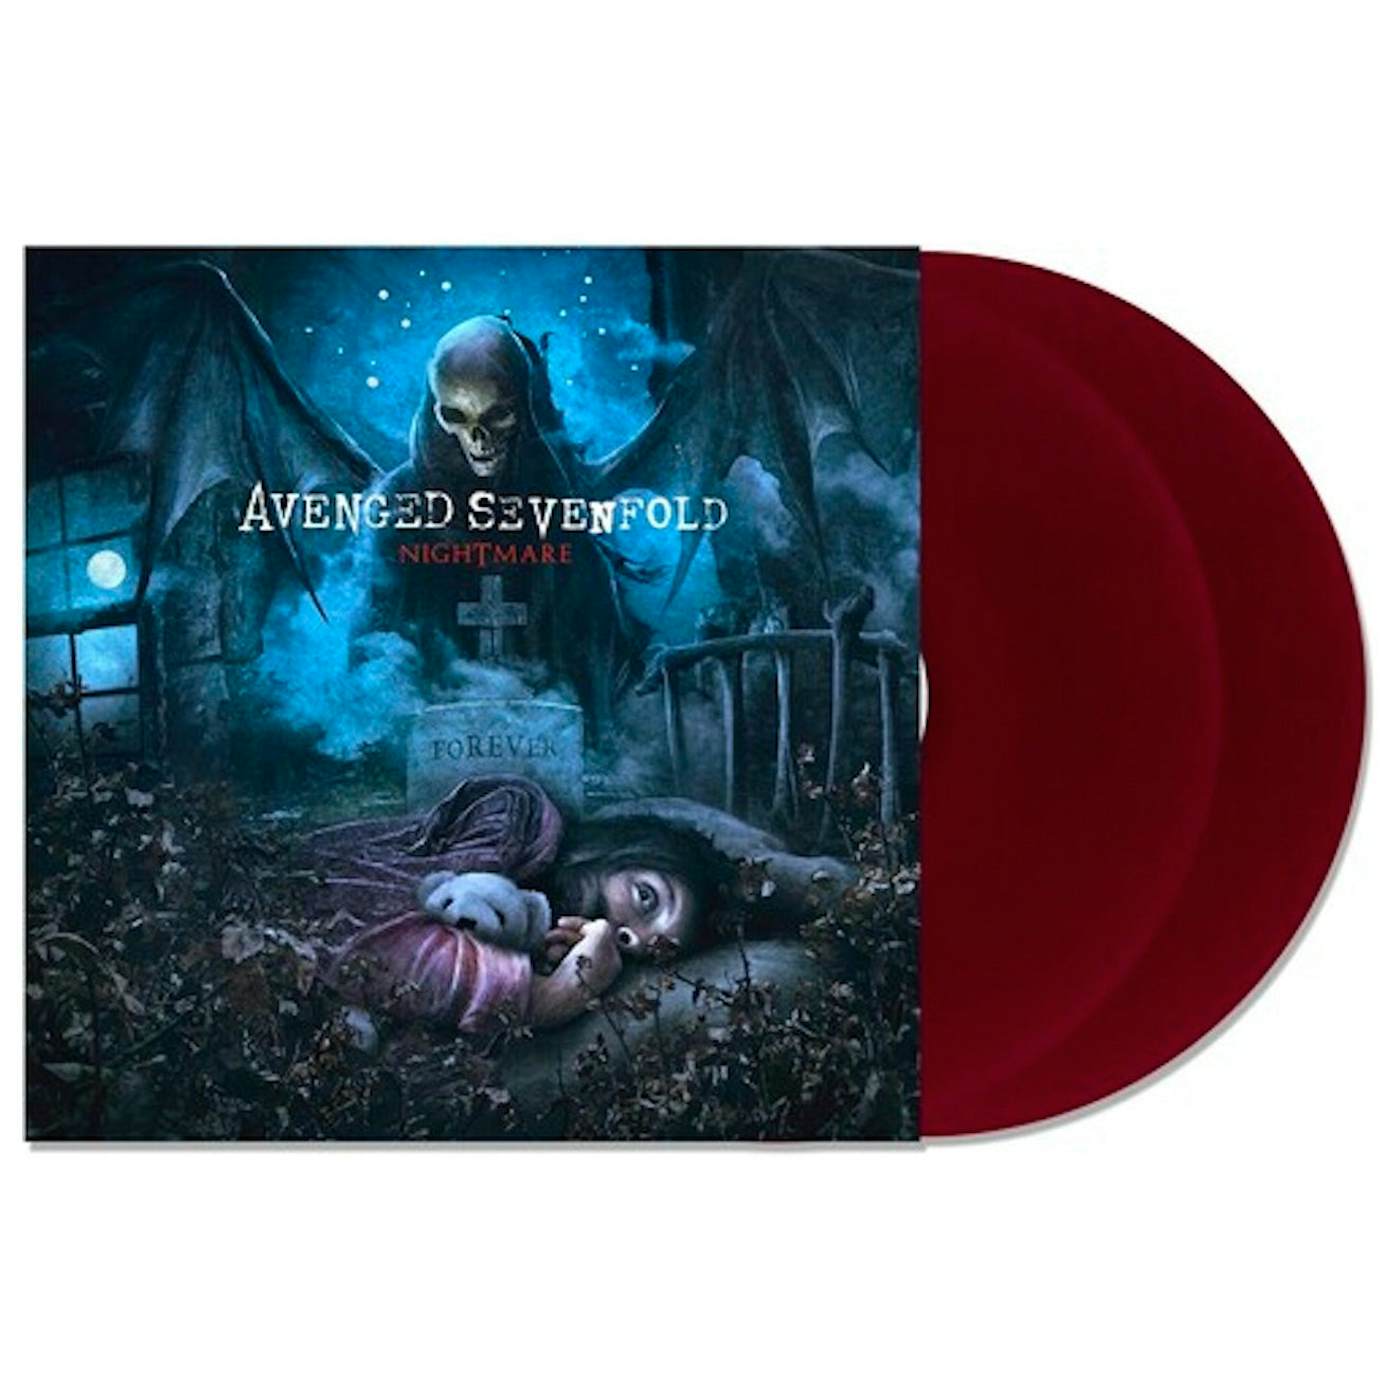 Avenged Sevenfold "Nightmare" 2x12" (Vinyl)